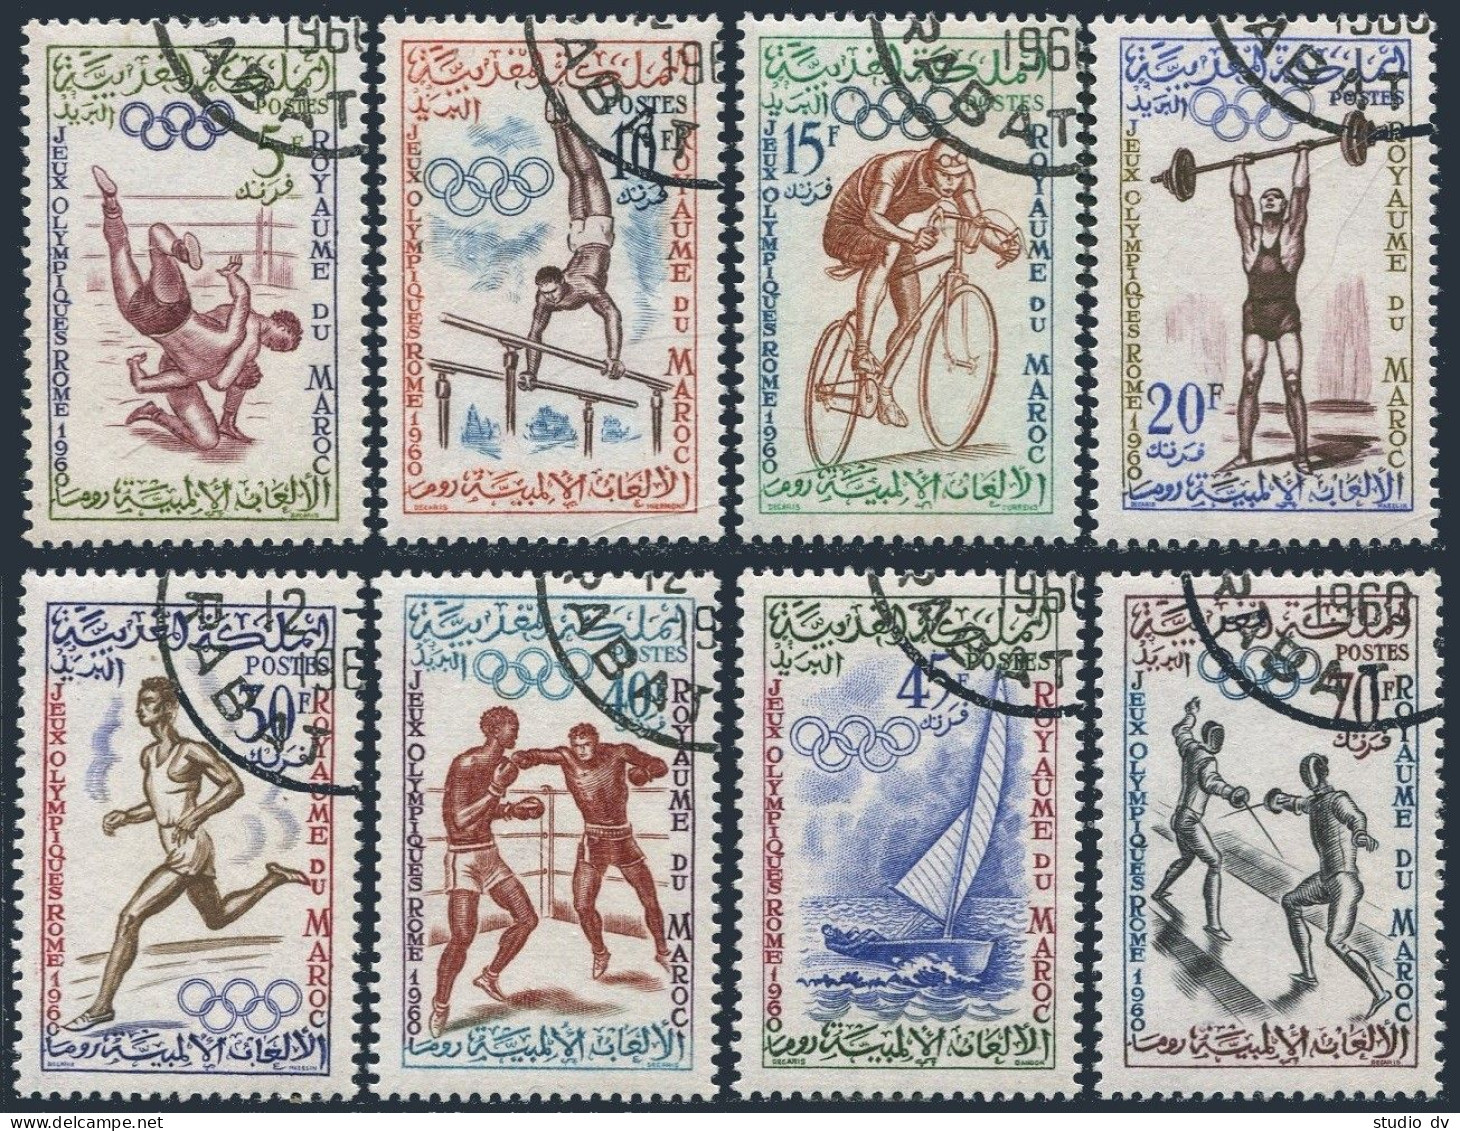 Morocco 45-52,CTO.Michel 462-469. Olympics Rome-1960.Wrestlers,Gymnast,Fencers, - Marokko (1956-...)